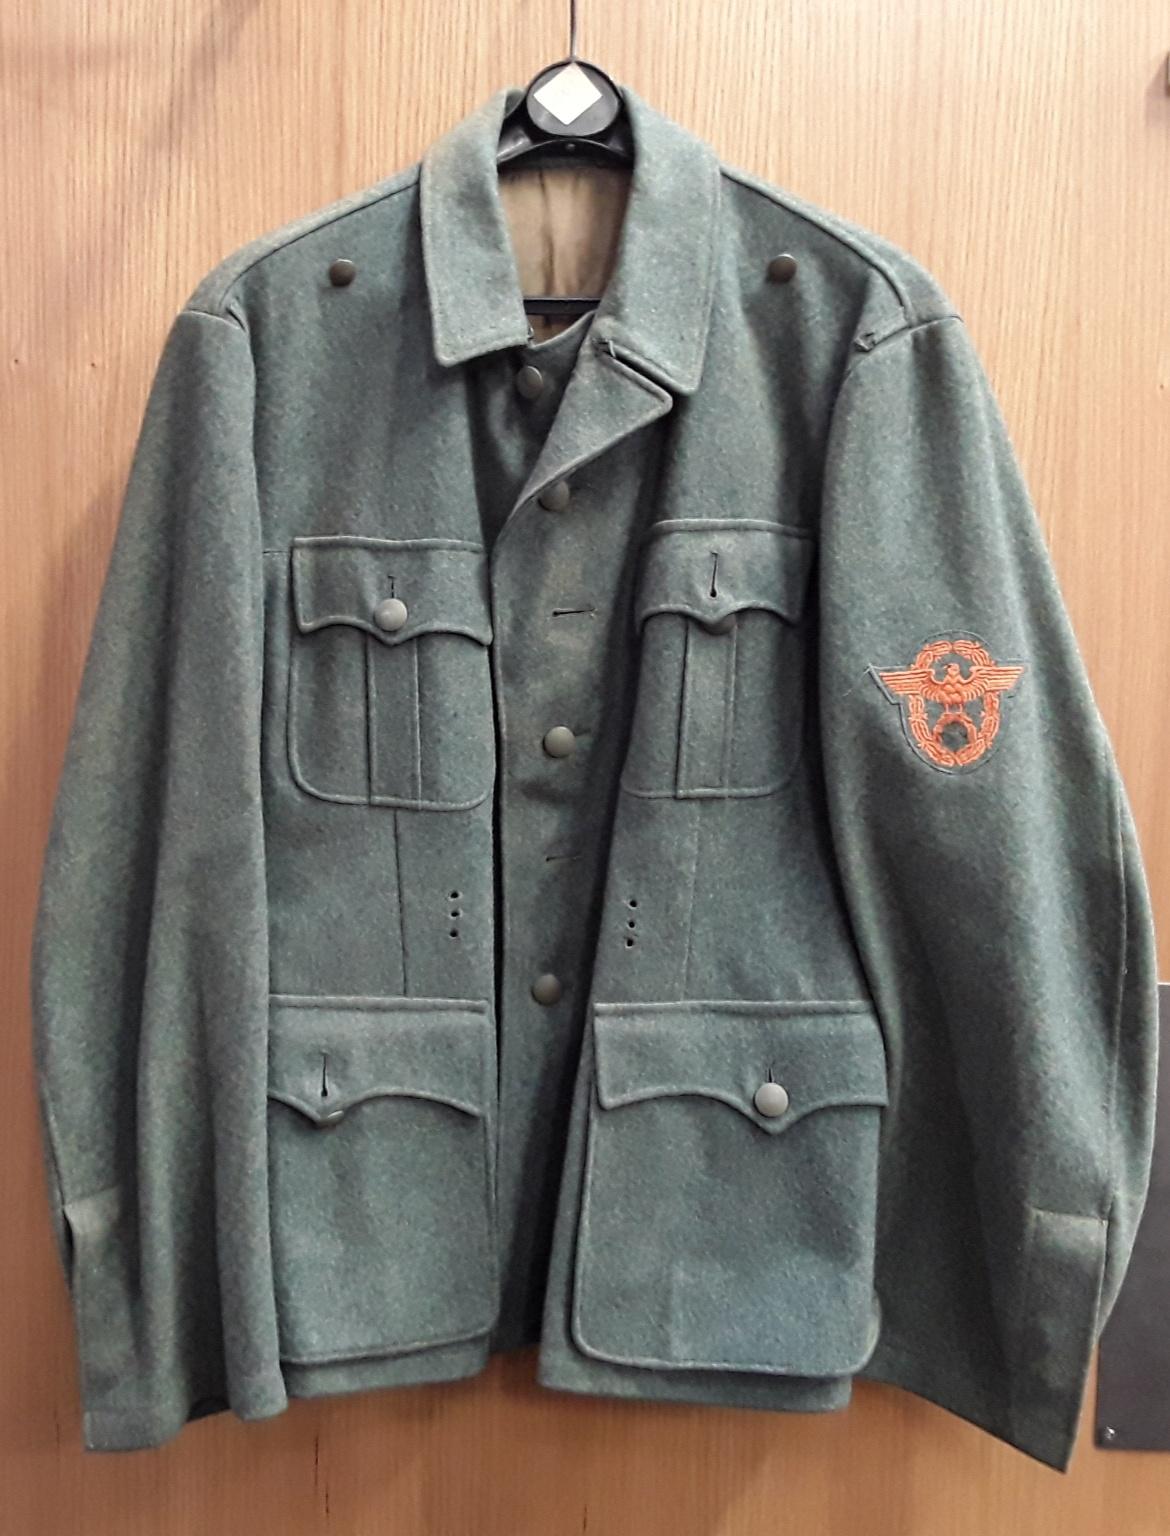 WWII Nazi military uniform jacket.